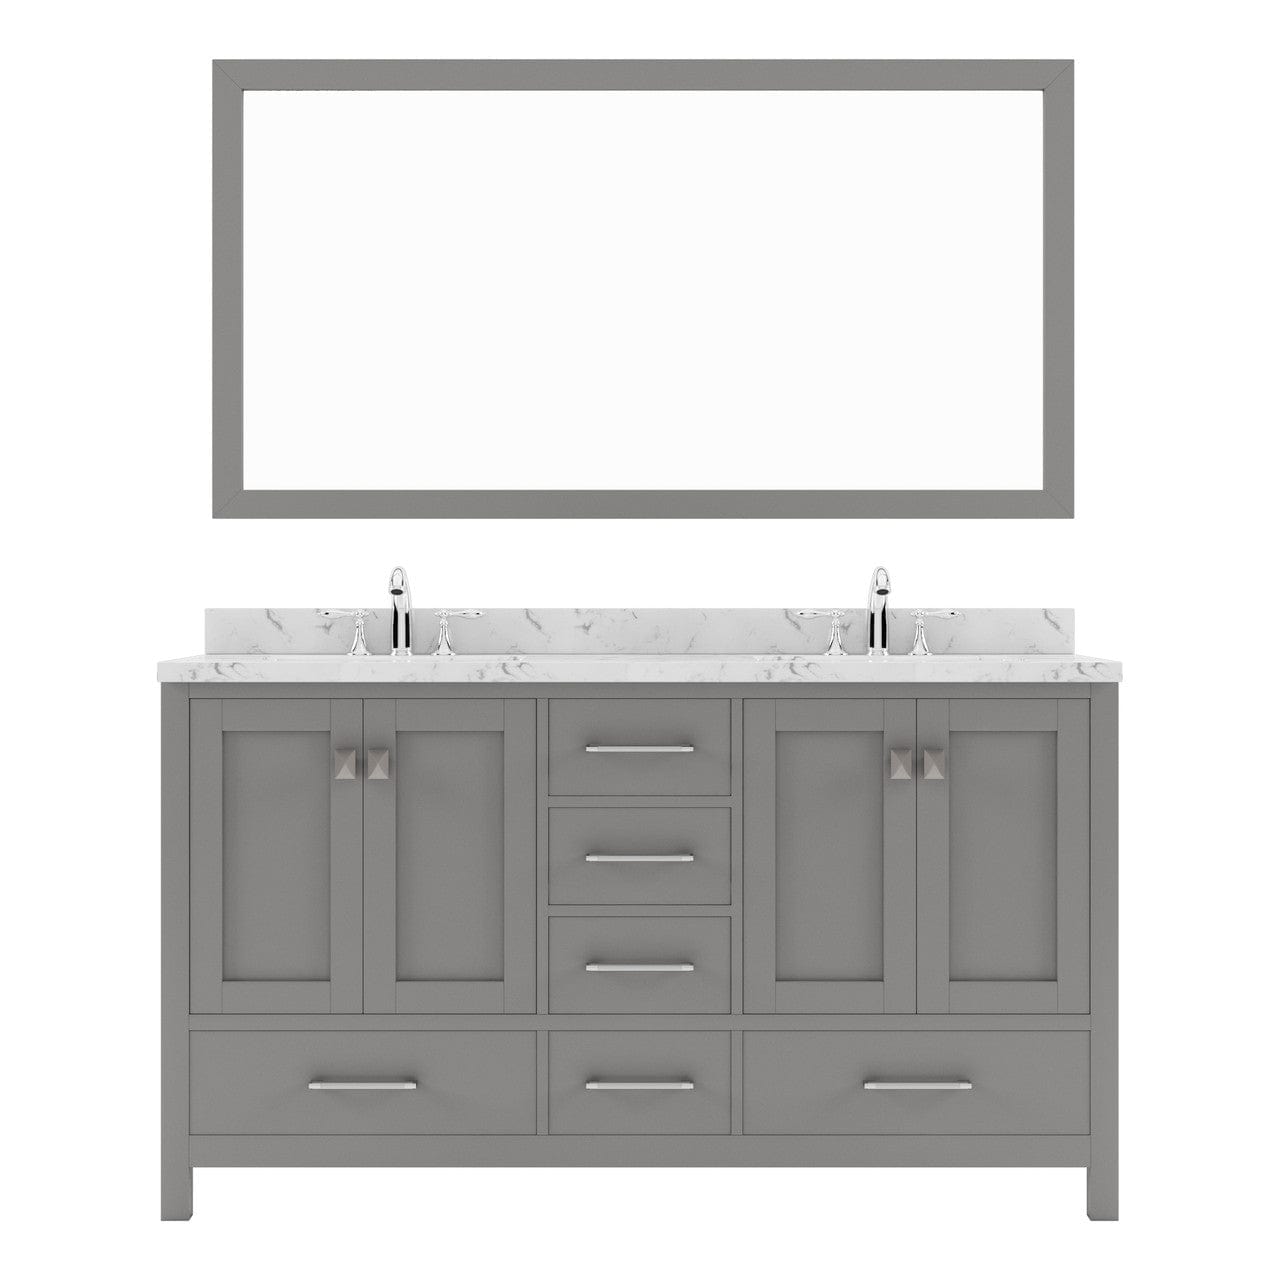 Caroline Avenue 60" Double Bath Vanity in Gray with Quartz Top white background